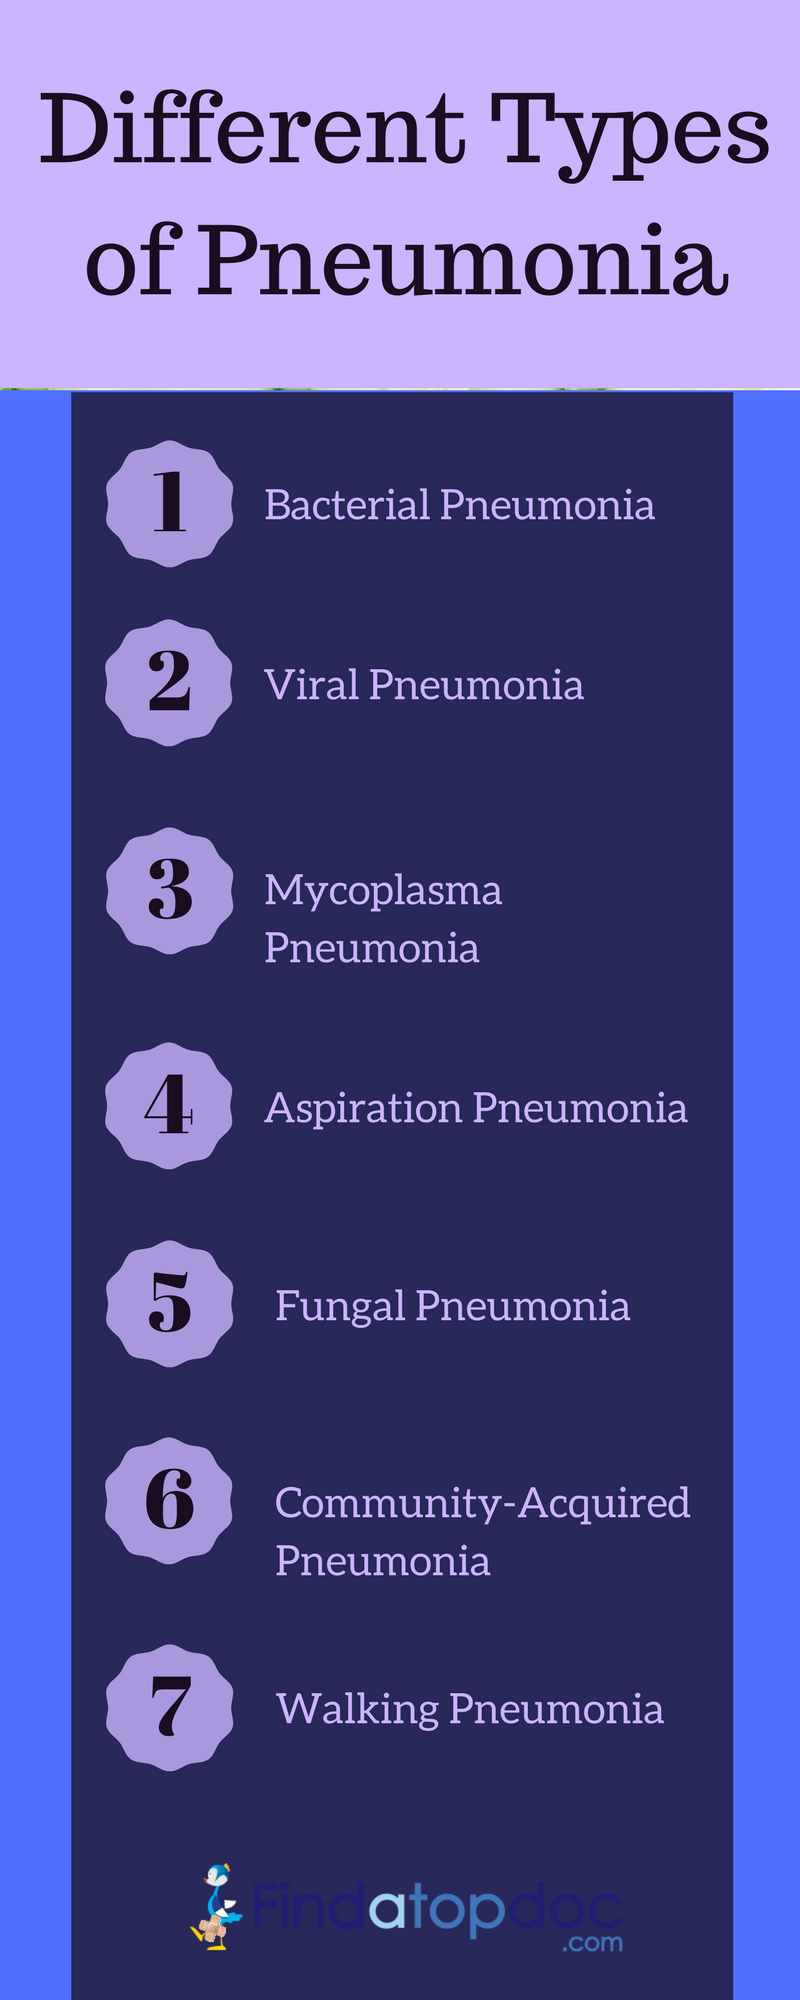 Different Types of Pneumonia